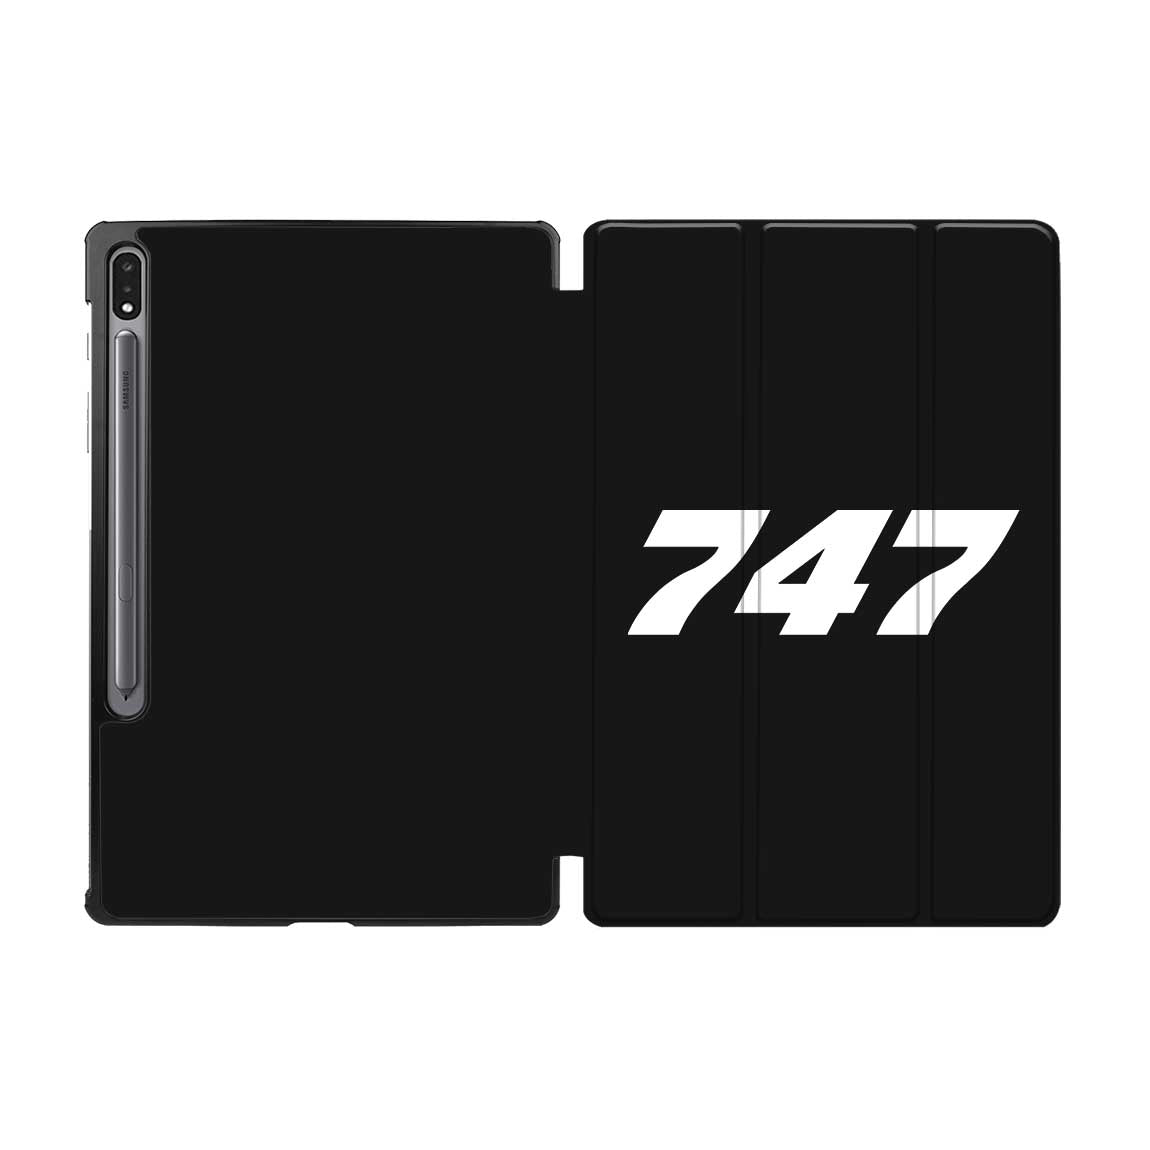 747 Flat Text Designed Samsung Tablet Cases